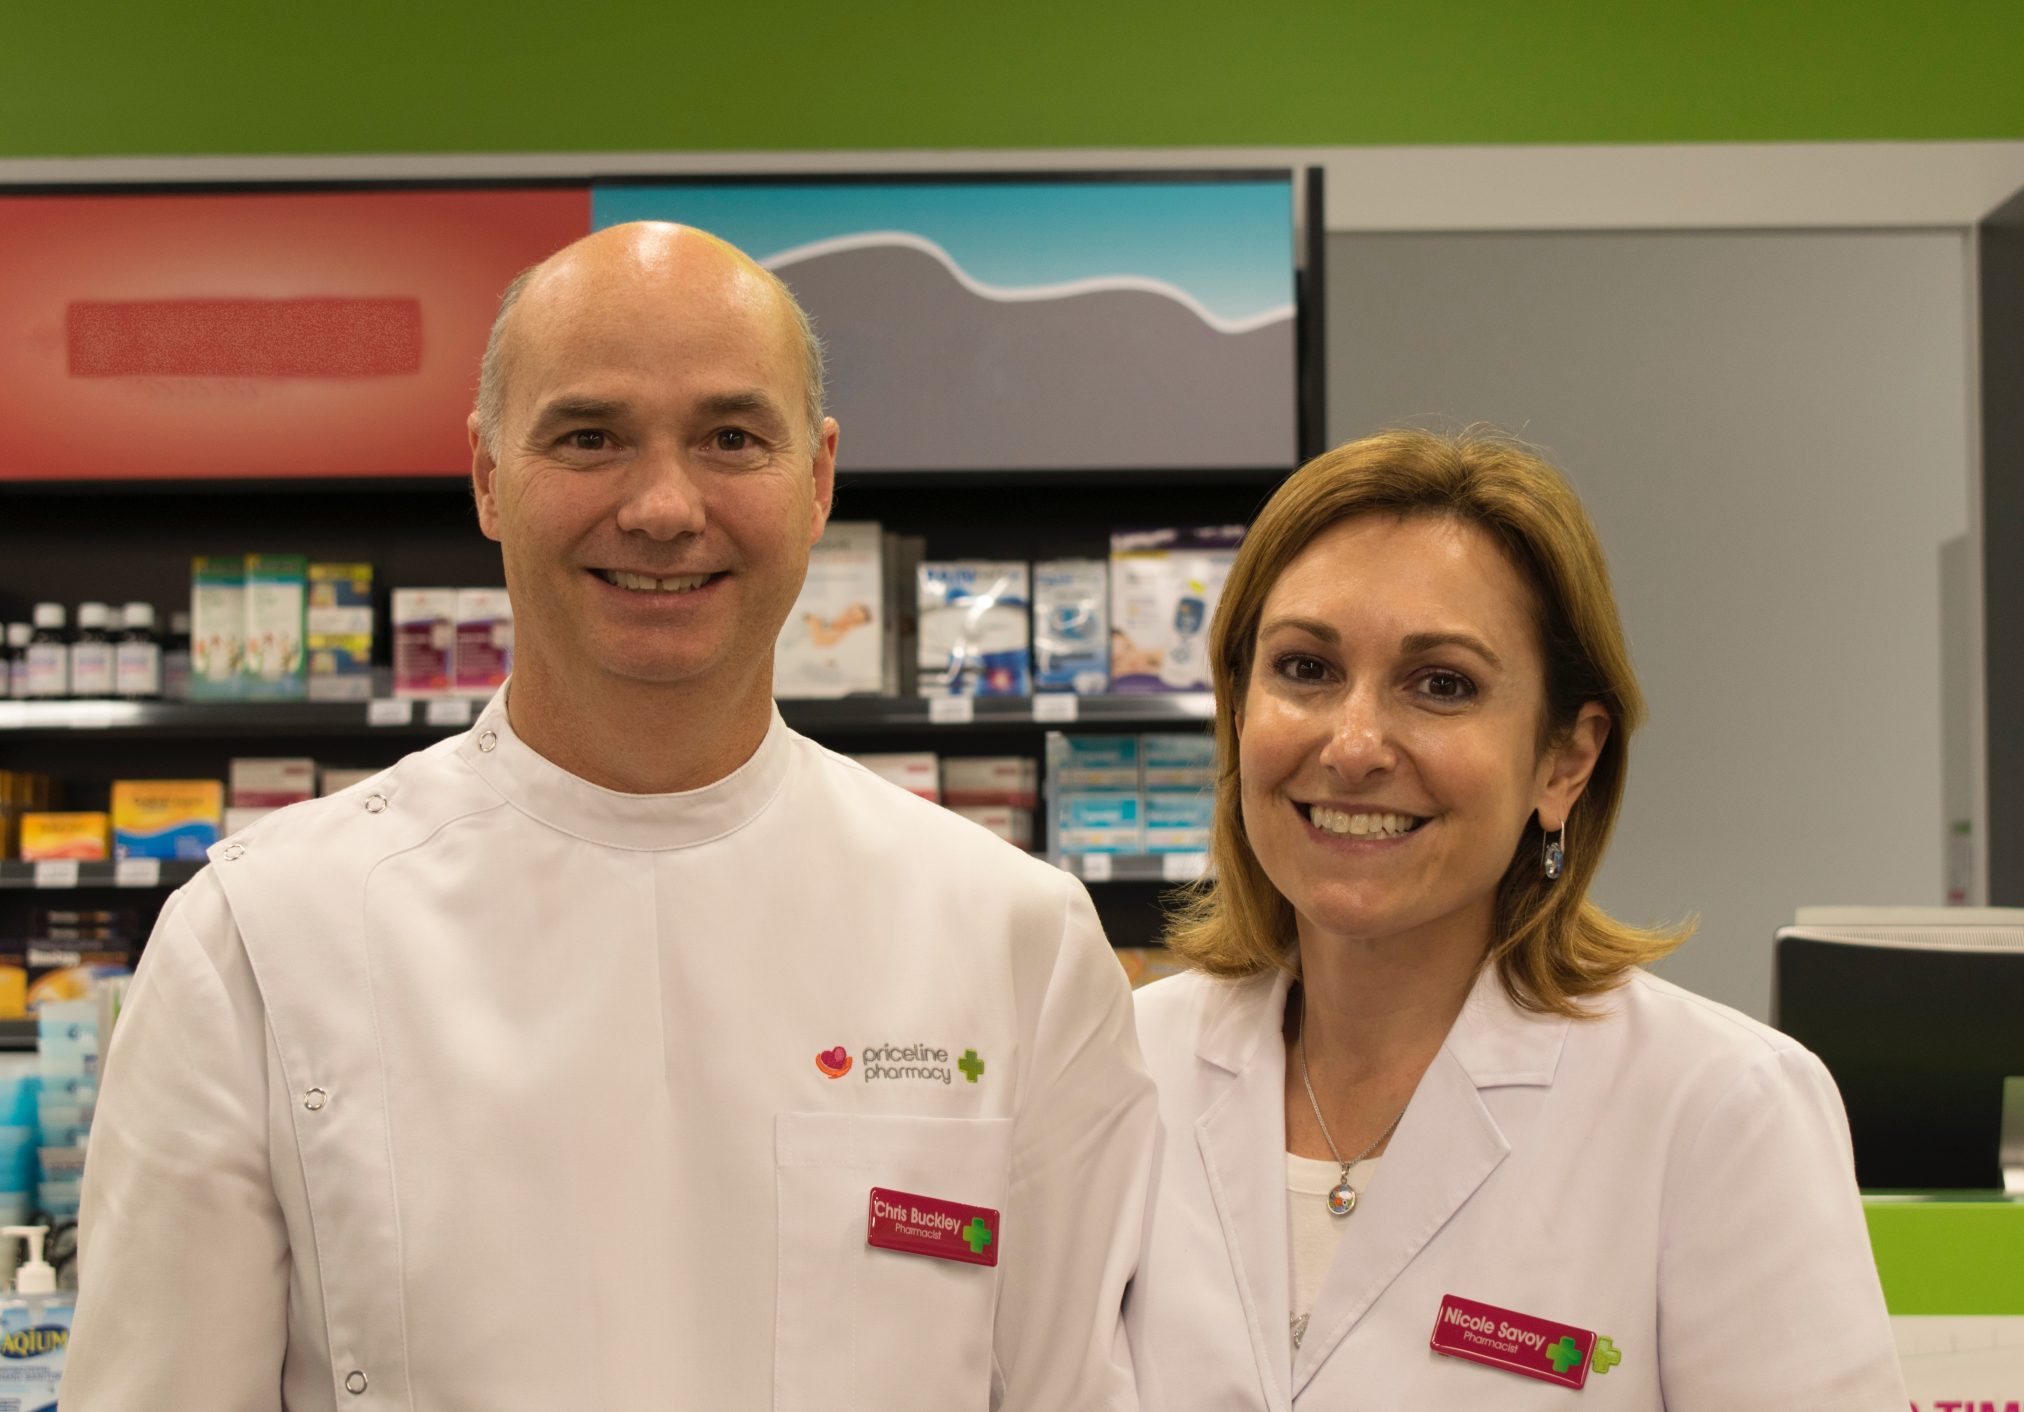 Franchise partners of Priceline Pharmacy Marrickville Metro, NSW, Chris Buckley and Nicole Savoy.